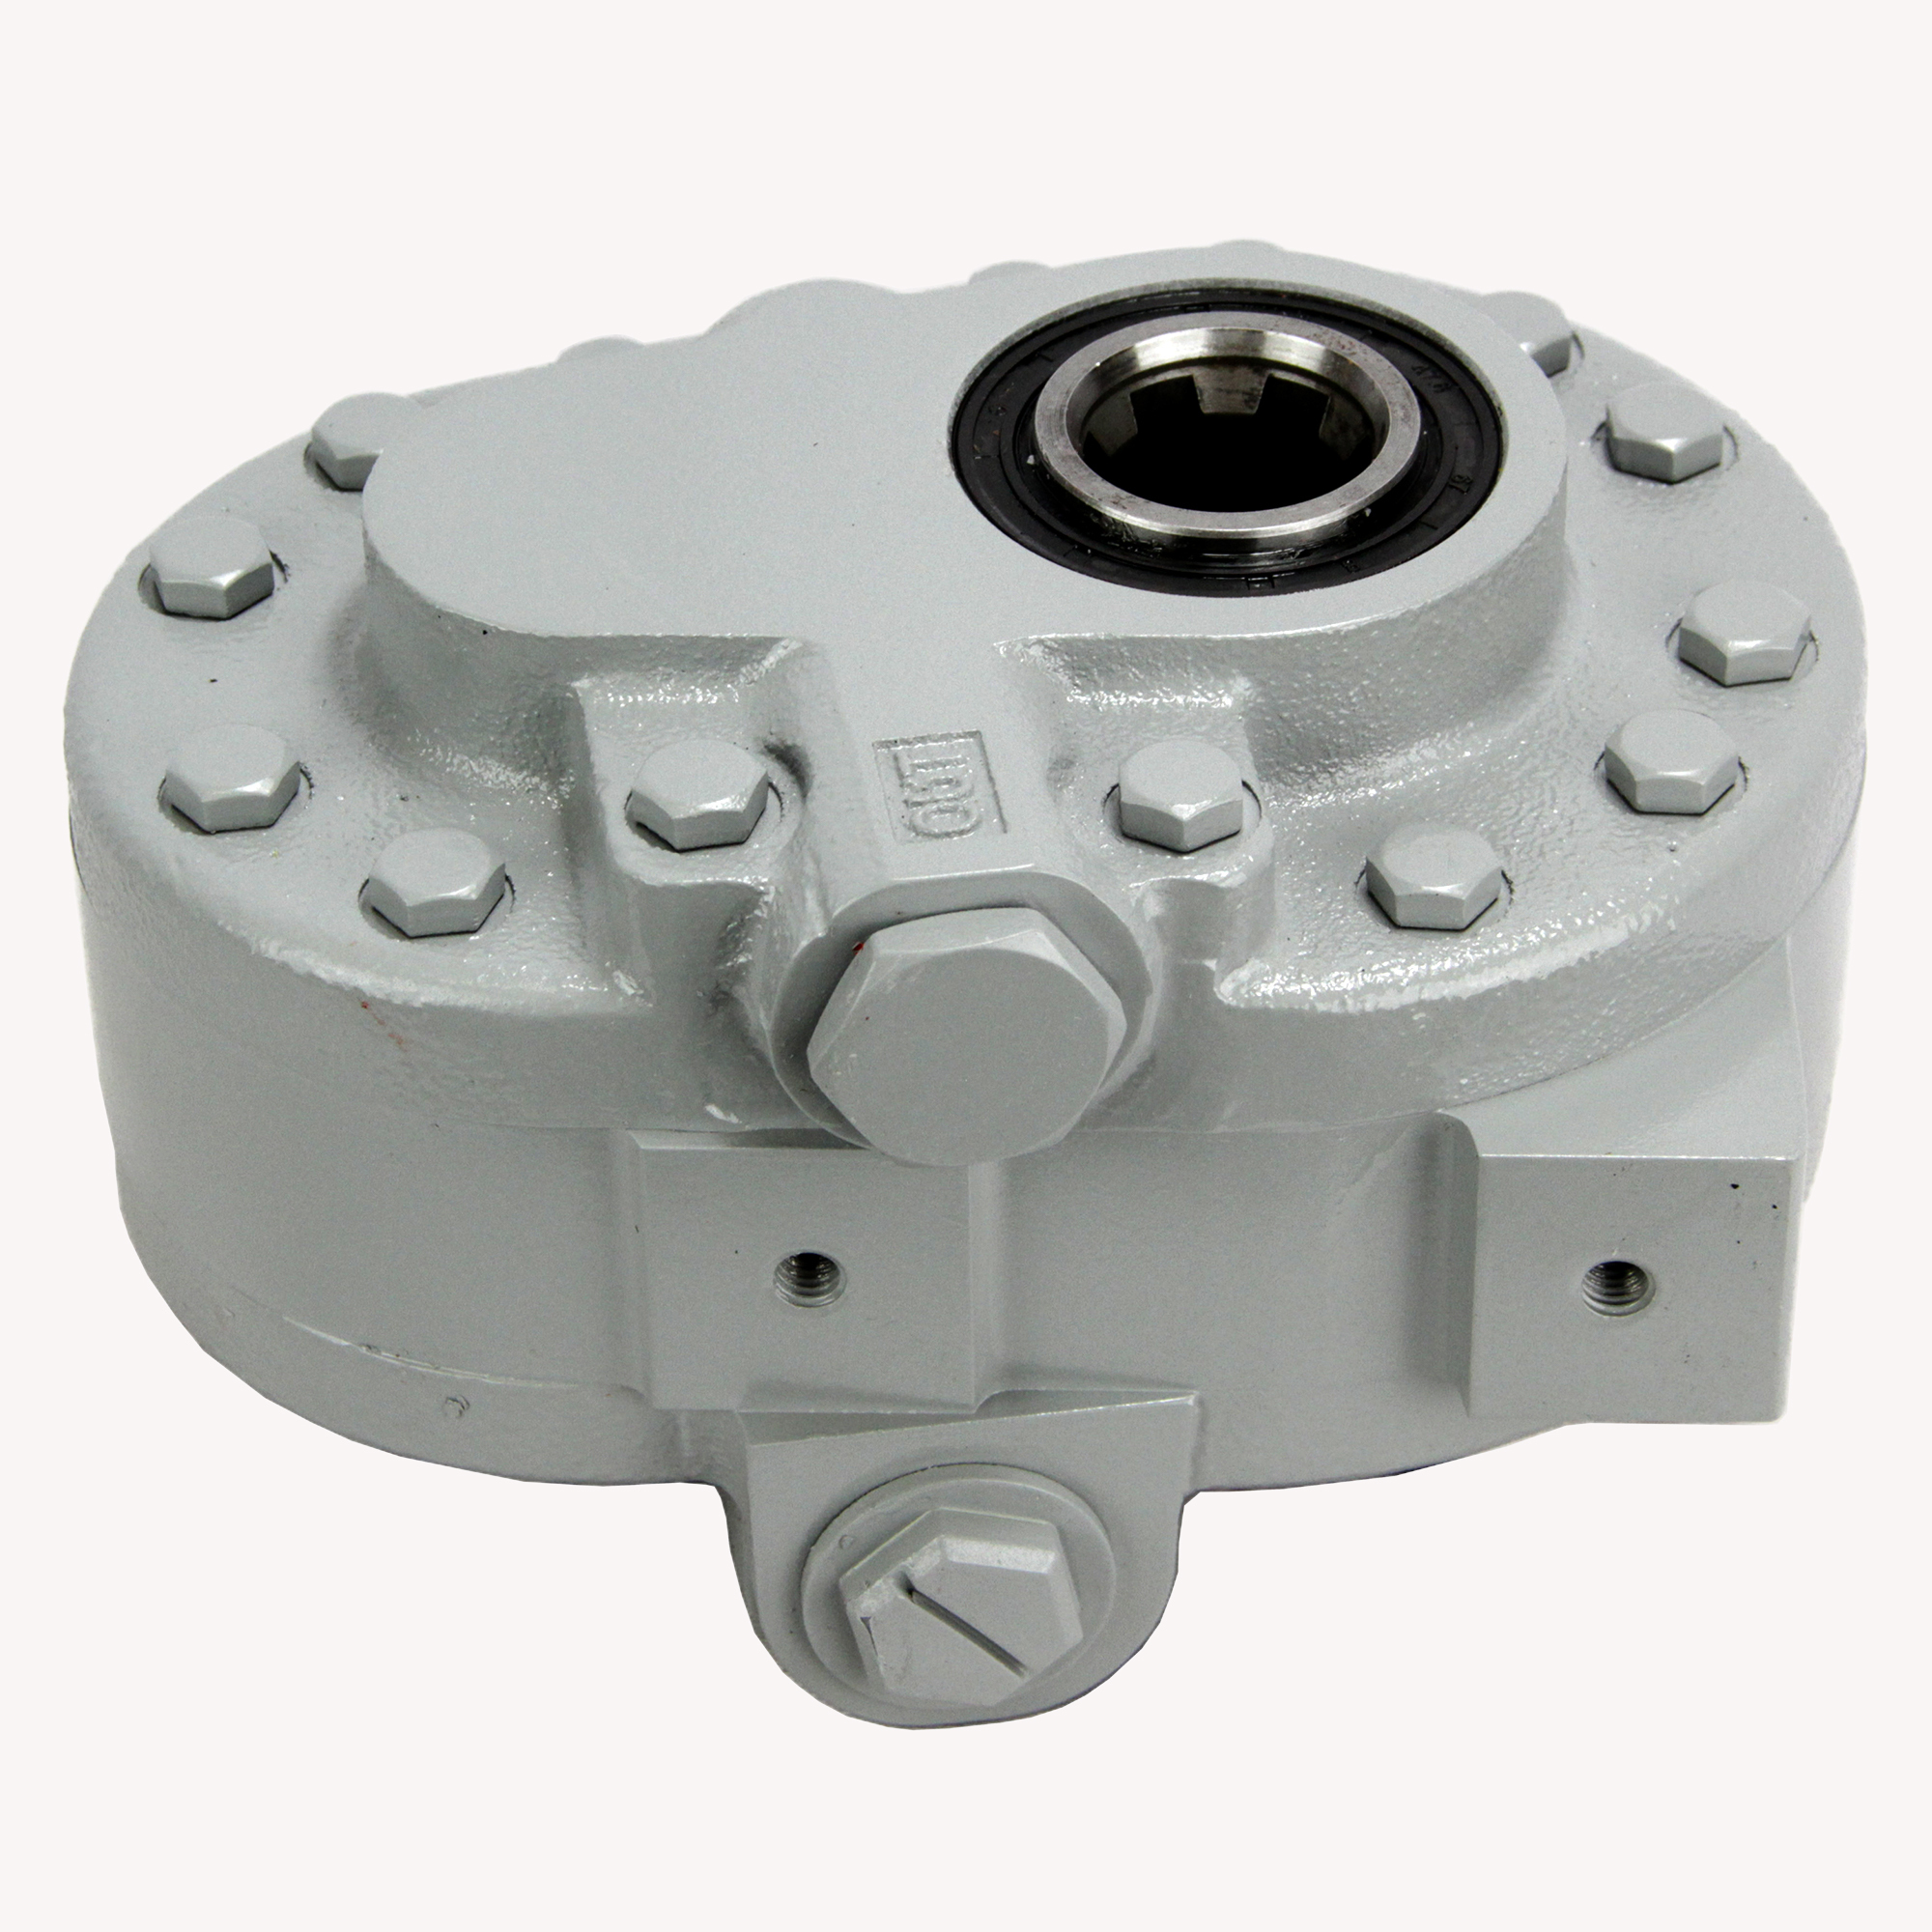 Bailey, PTO Hydraulic Gear Pump, Max. PSI 2500, Max. RPM 540, Max. Flow Rate 21 GPM, Model 252560